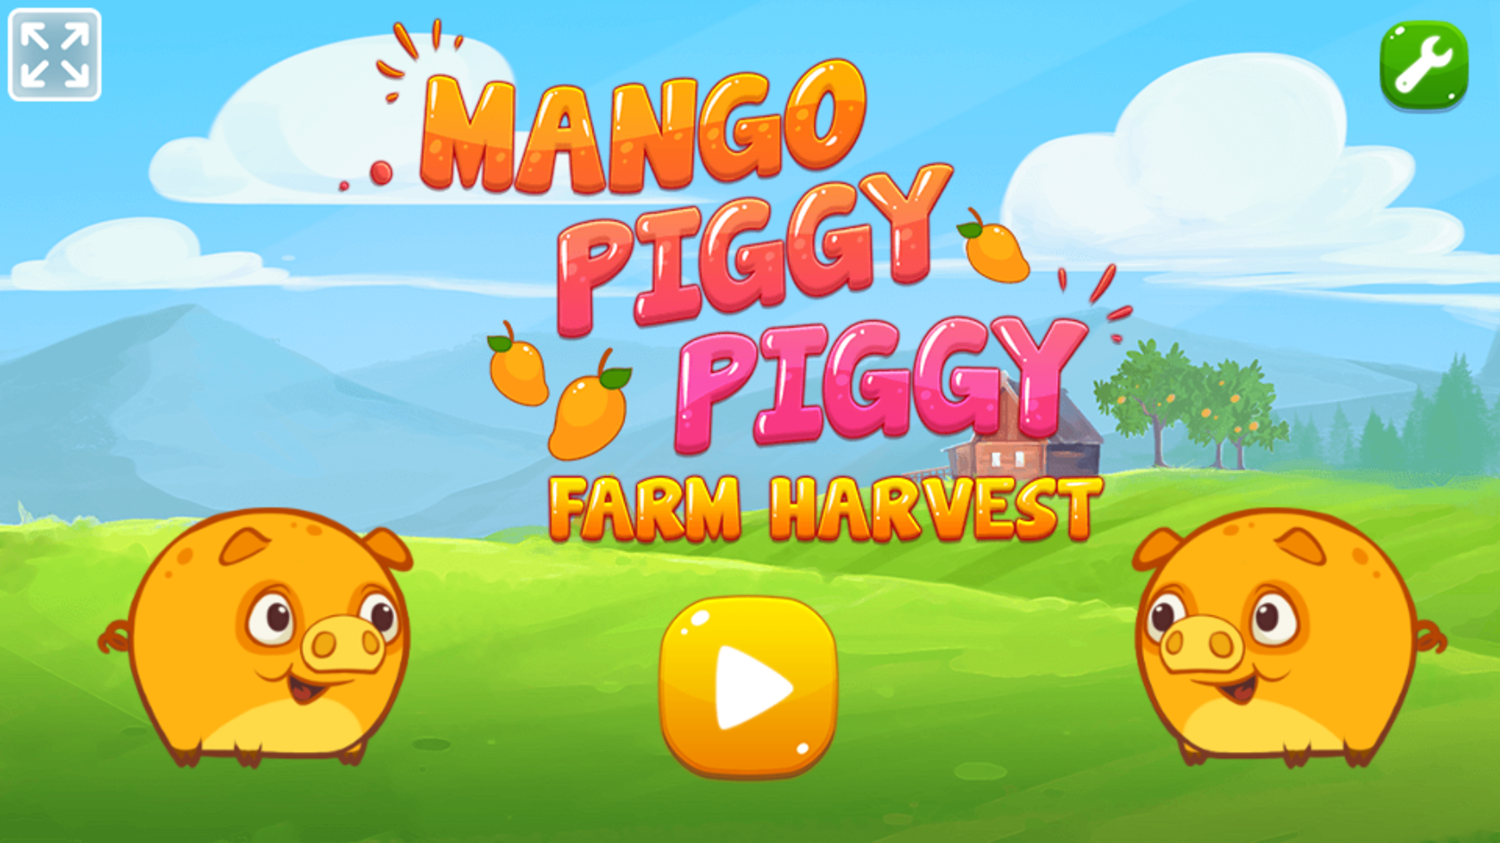 Mango Piggy Piggy Farm Harvest Game Welcome Screen Screenshot.